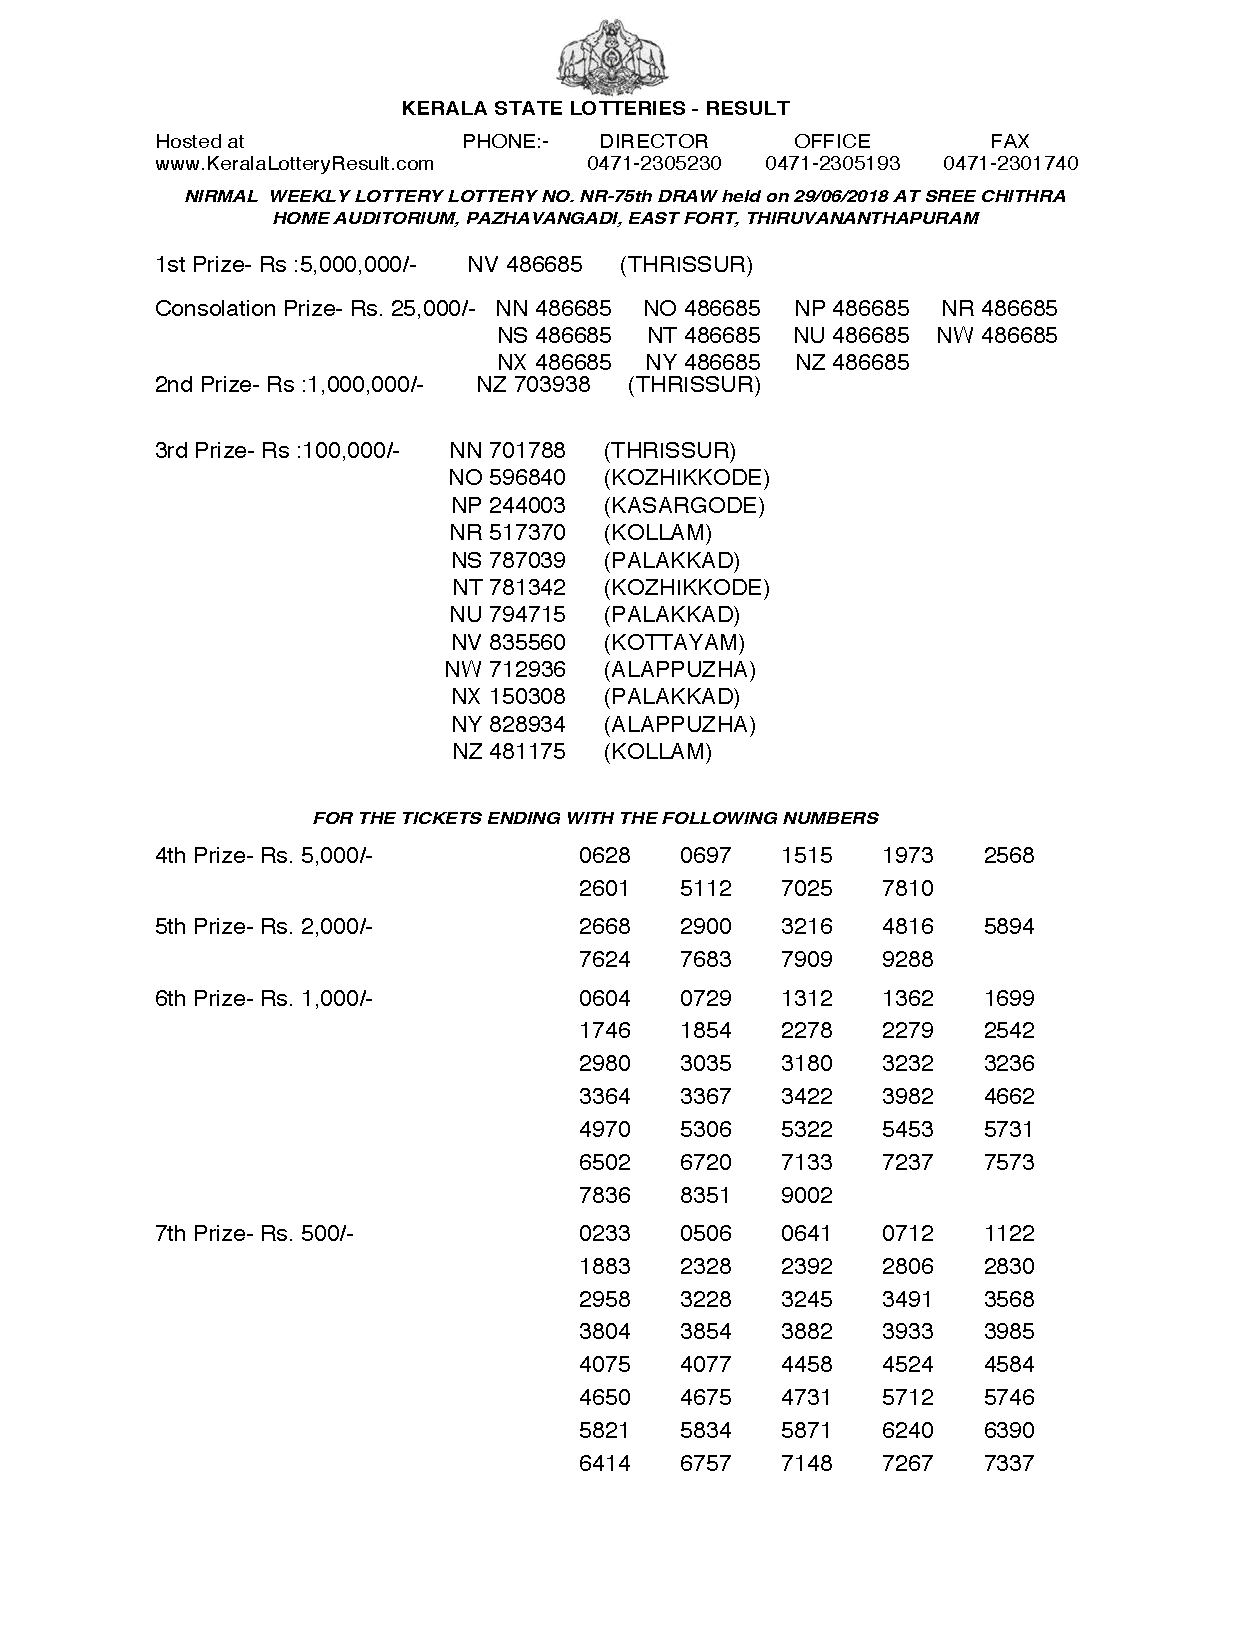 Nirmal NR75 Kerala Lottery Results Screenshot: Page 1